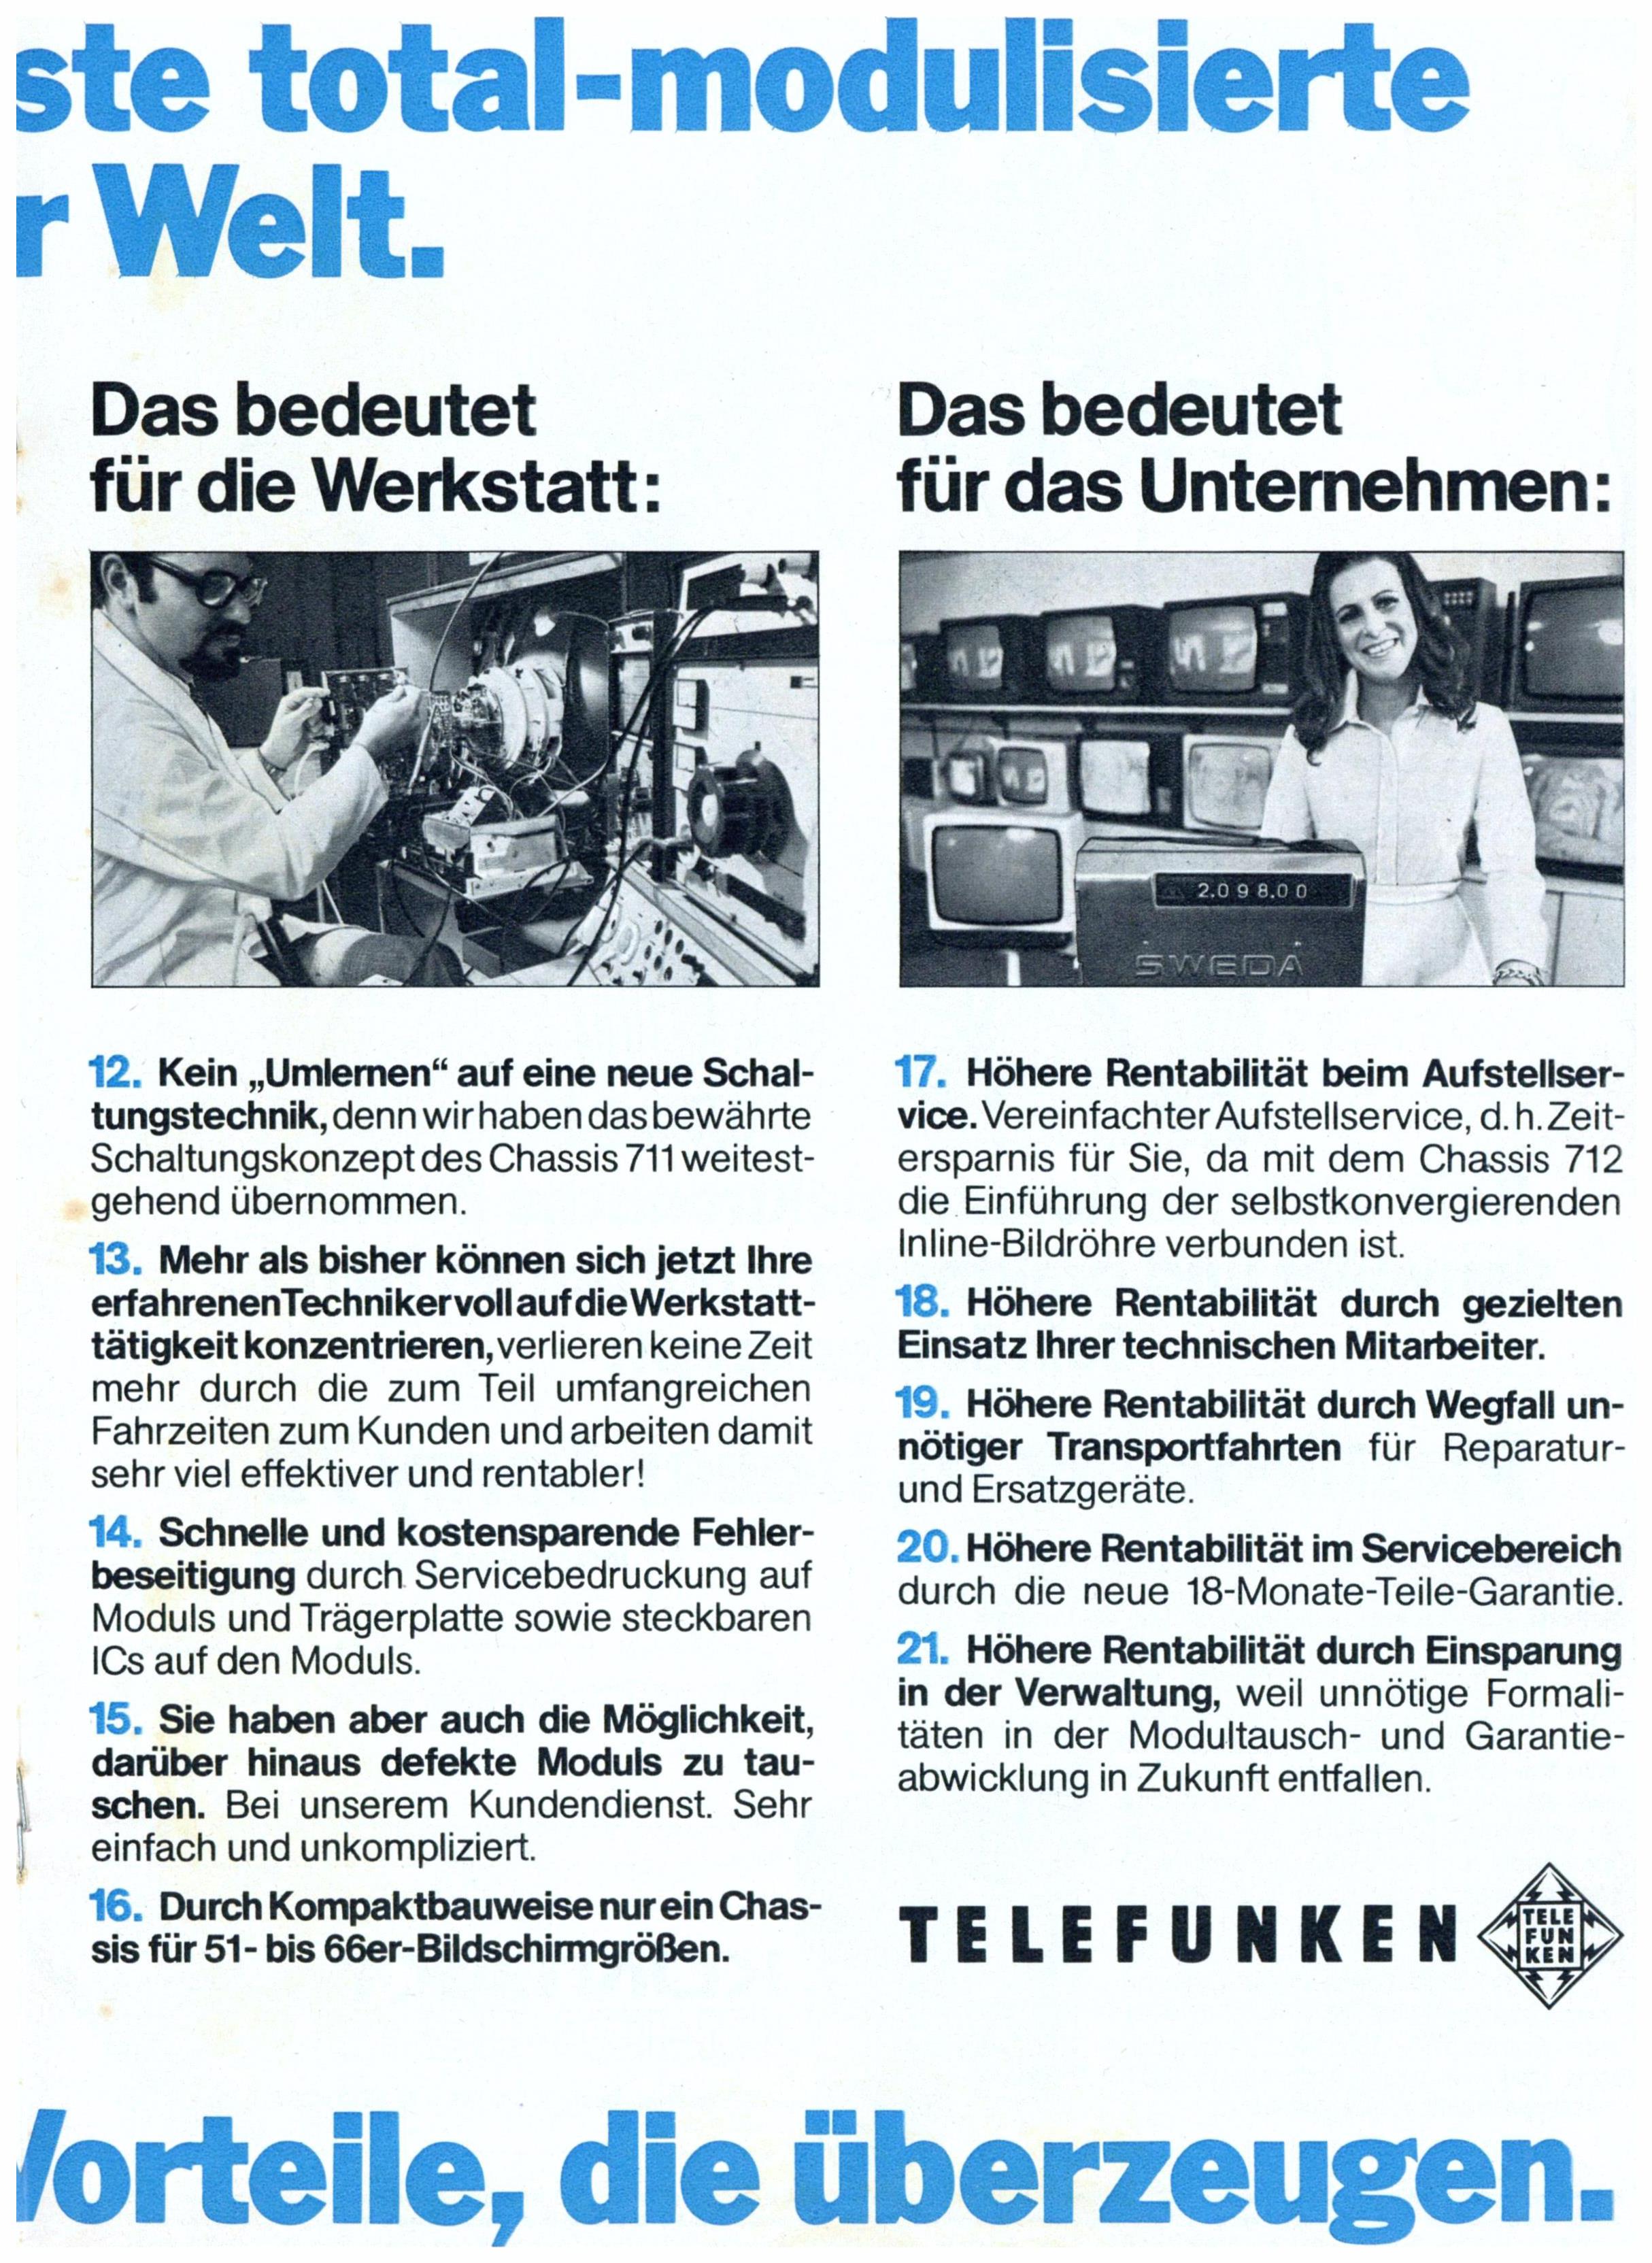 Telefunken 1975 1-4.jpg